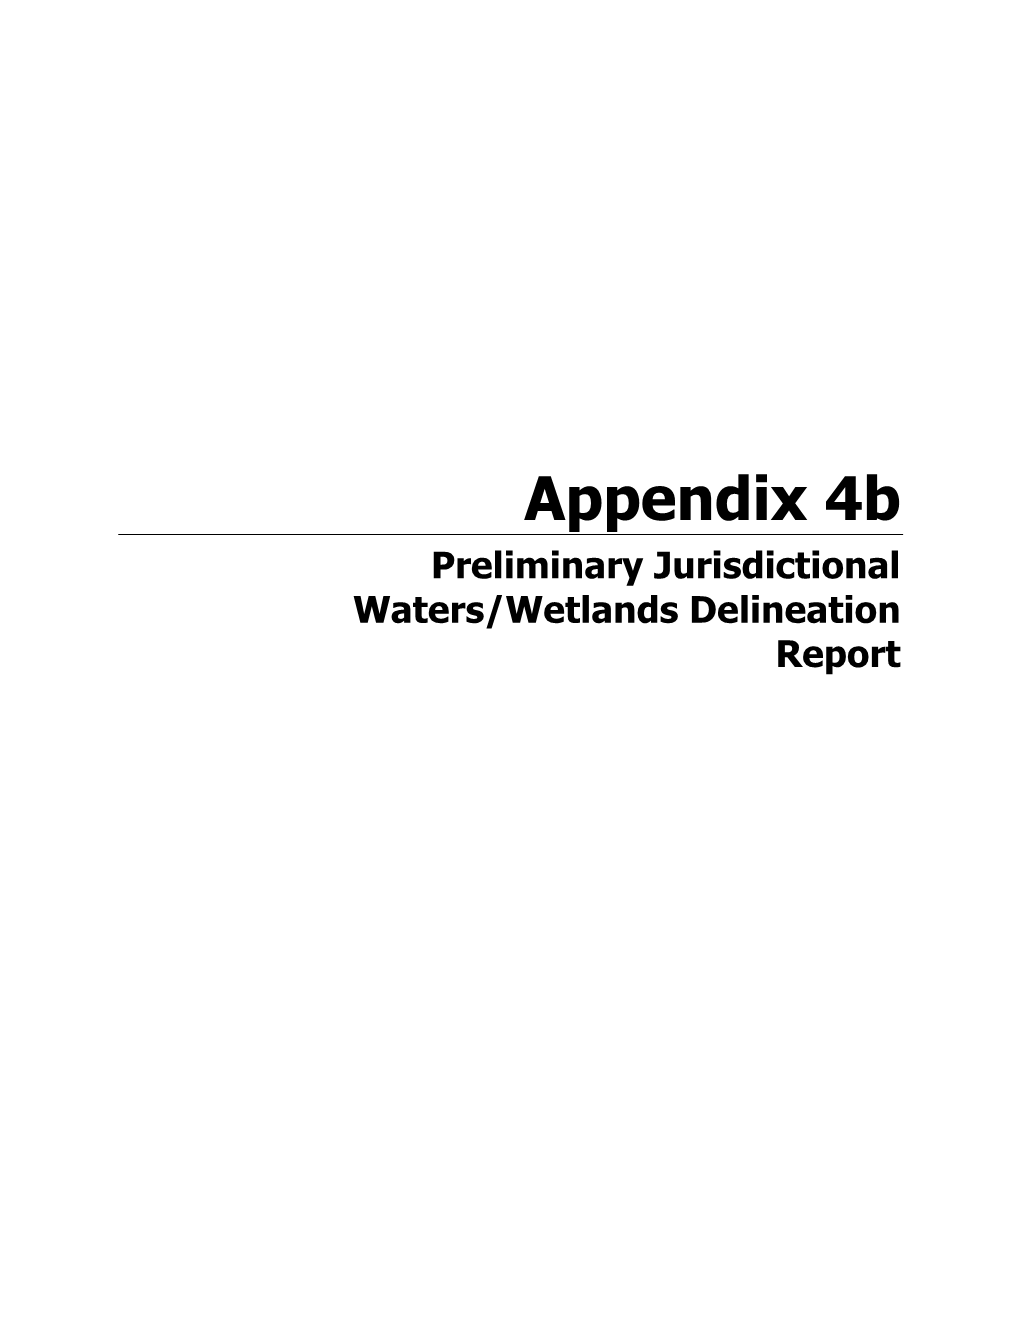 Appendix 4B Preliminary Jurisdictional Waters/Wetlands Delineation Report